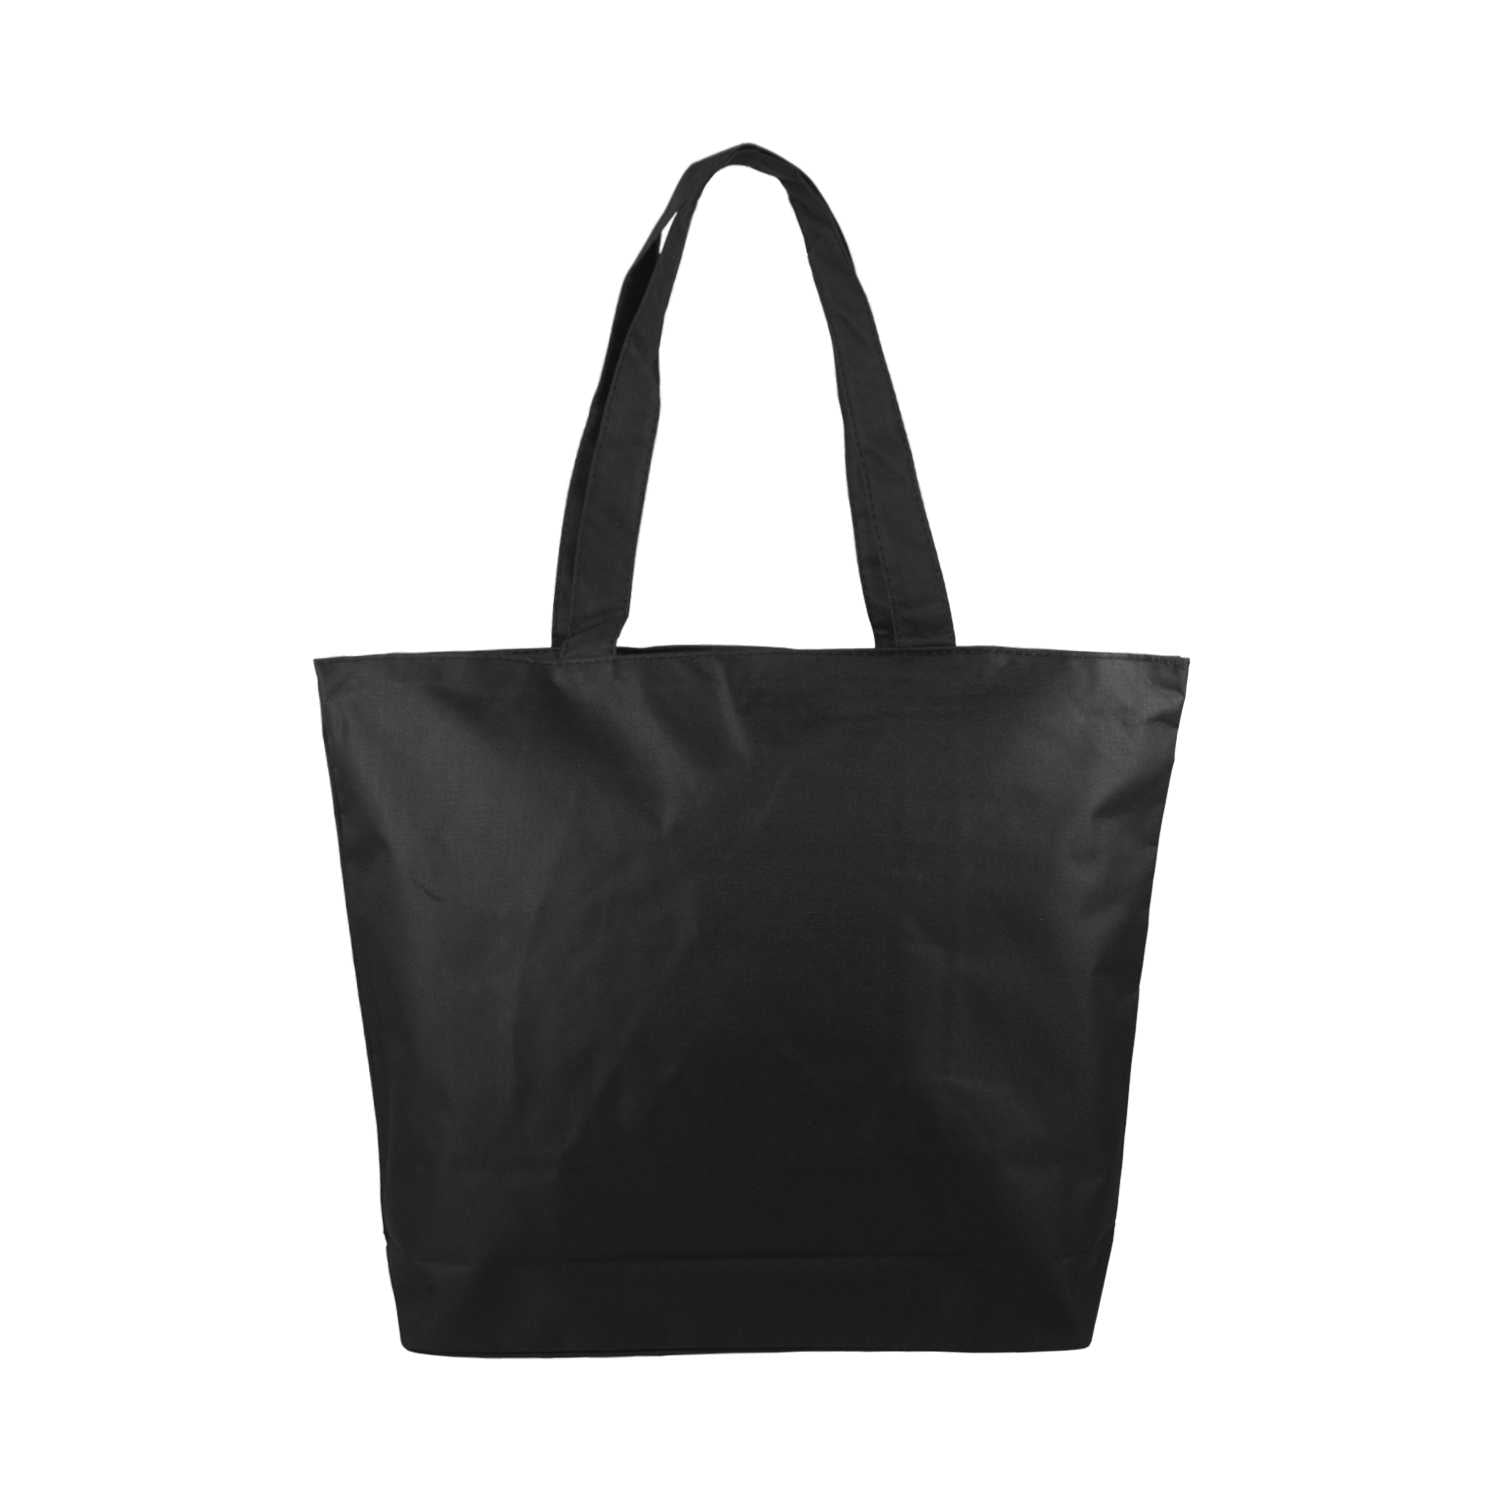 Black Canvas Cotton Tote Bag - Tote Bags For Women & Men